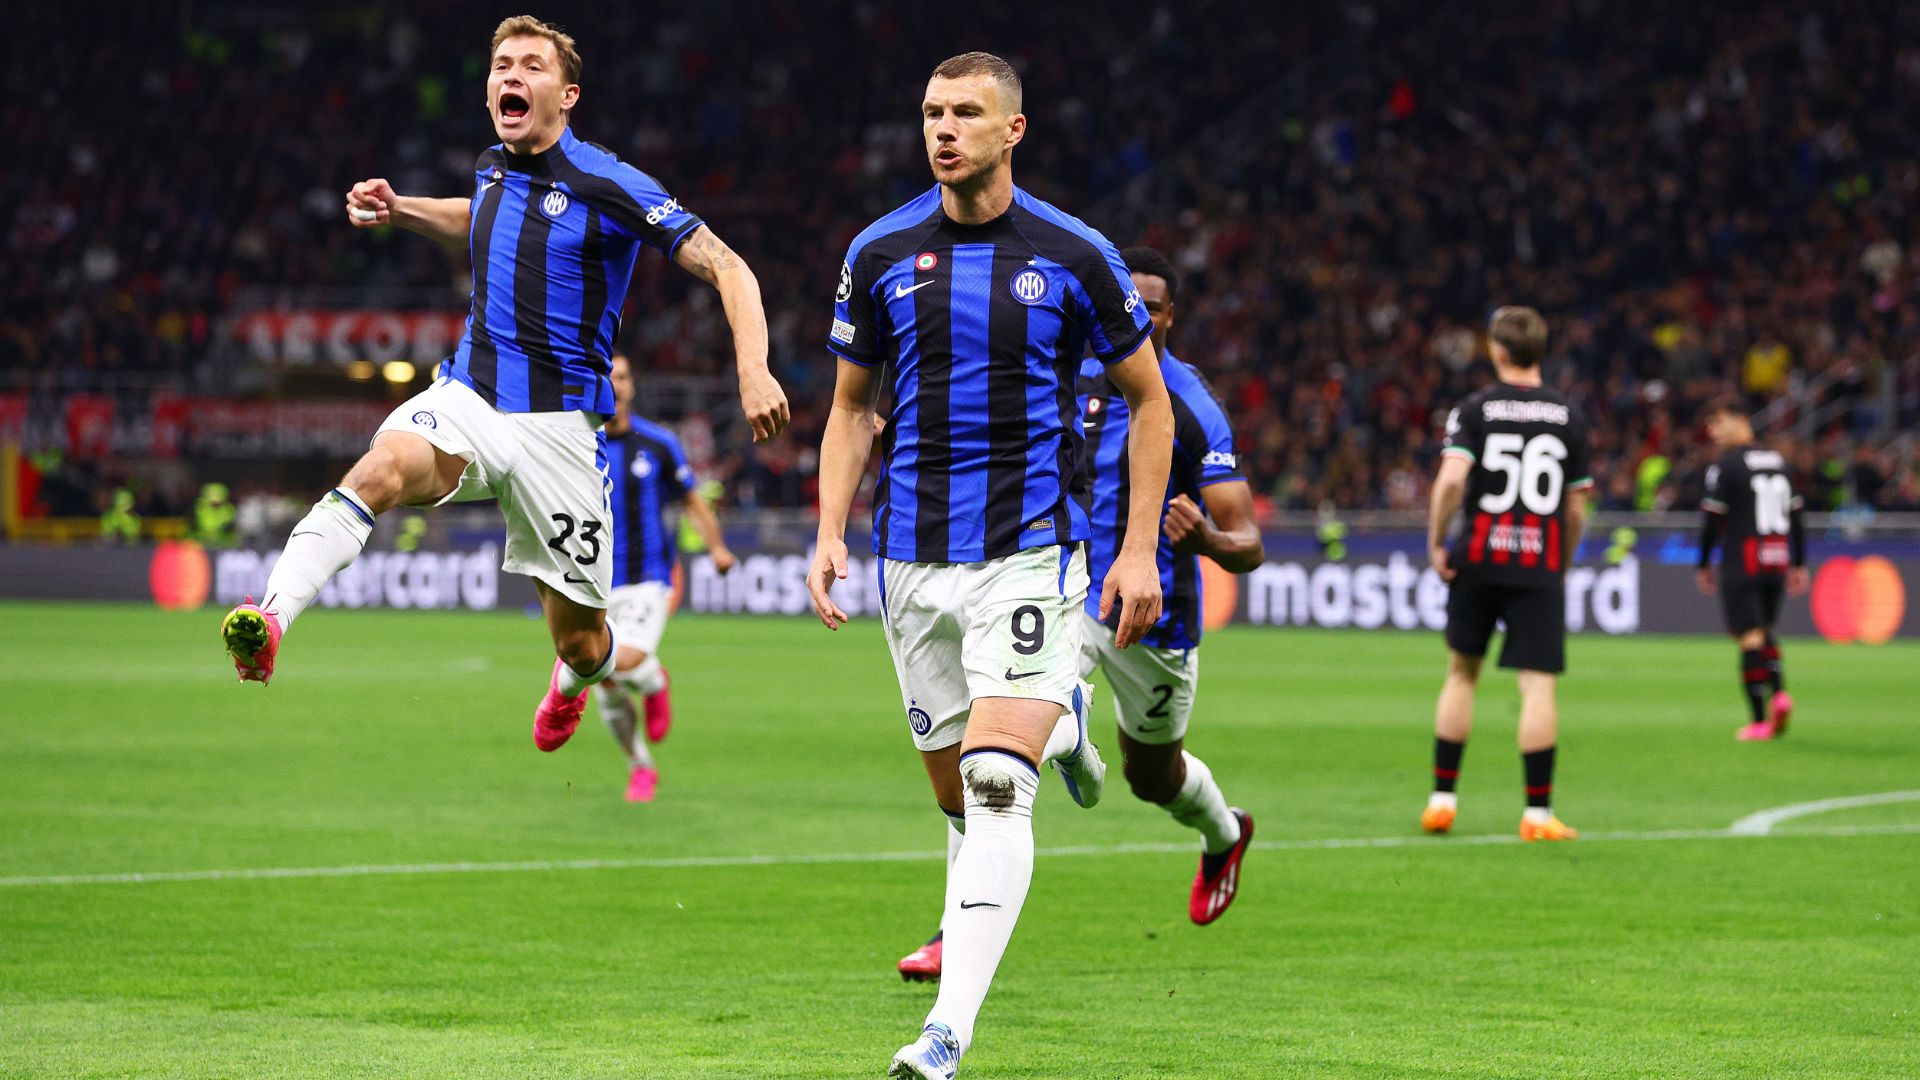 Dzeko opened the scoring for Inter Milan 